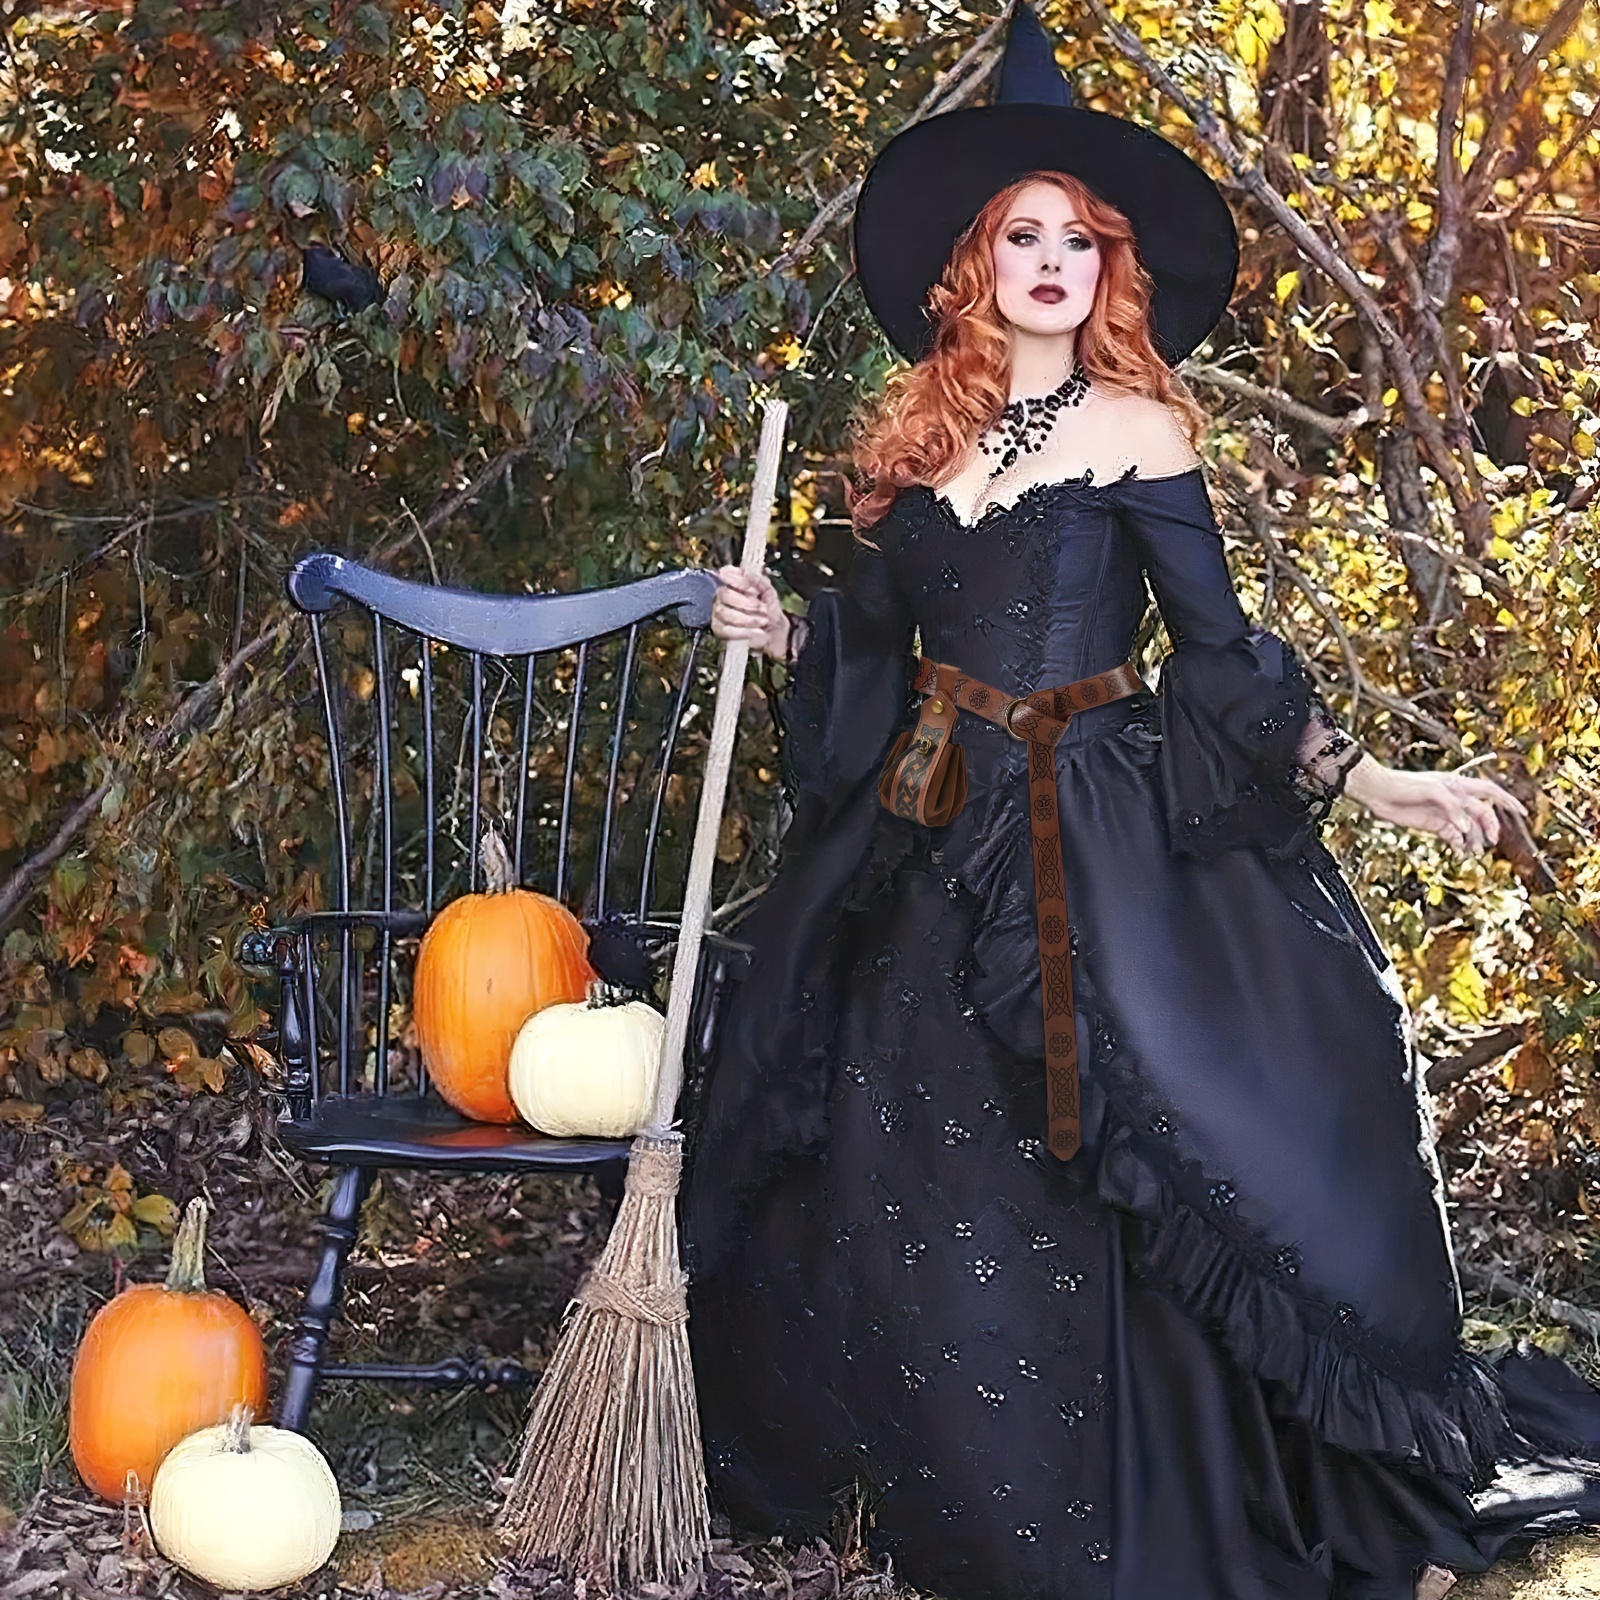 Costume de Magicien pour Halloween, Cosplay Médiéval, Robe de